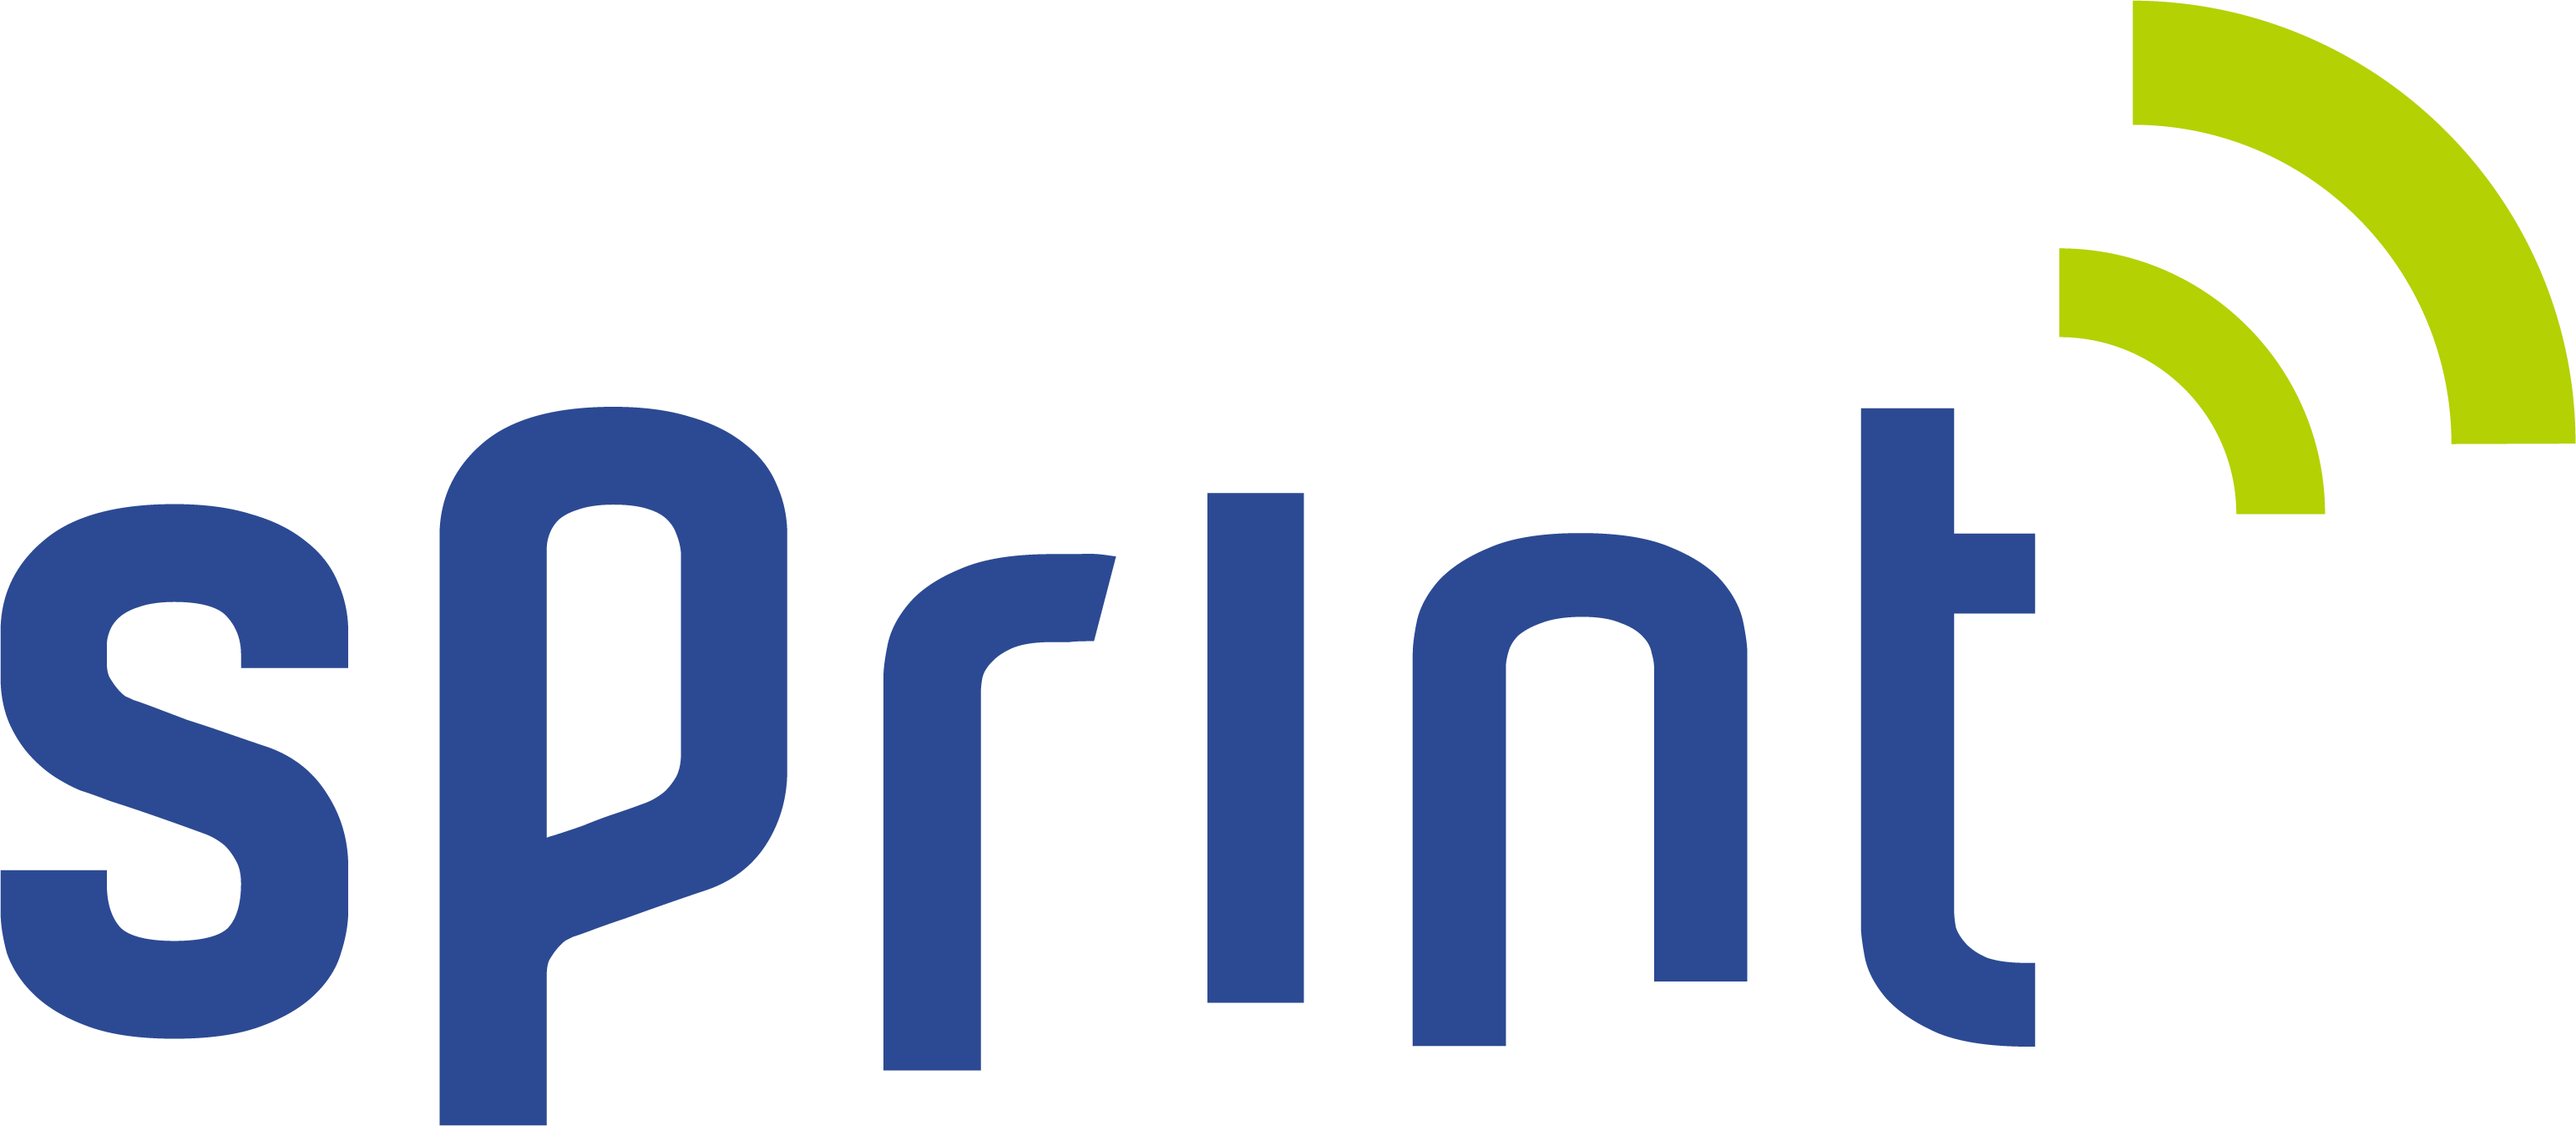 Logo Sprint